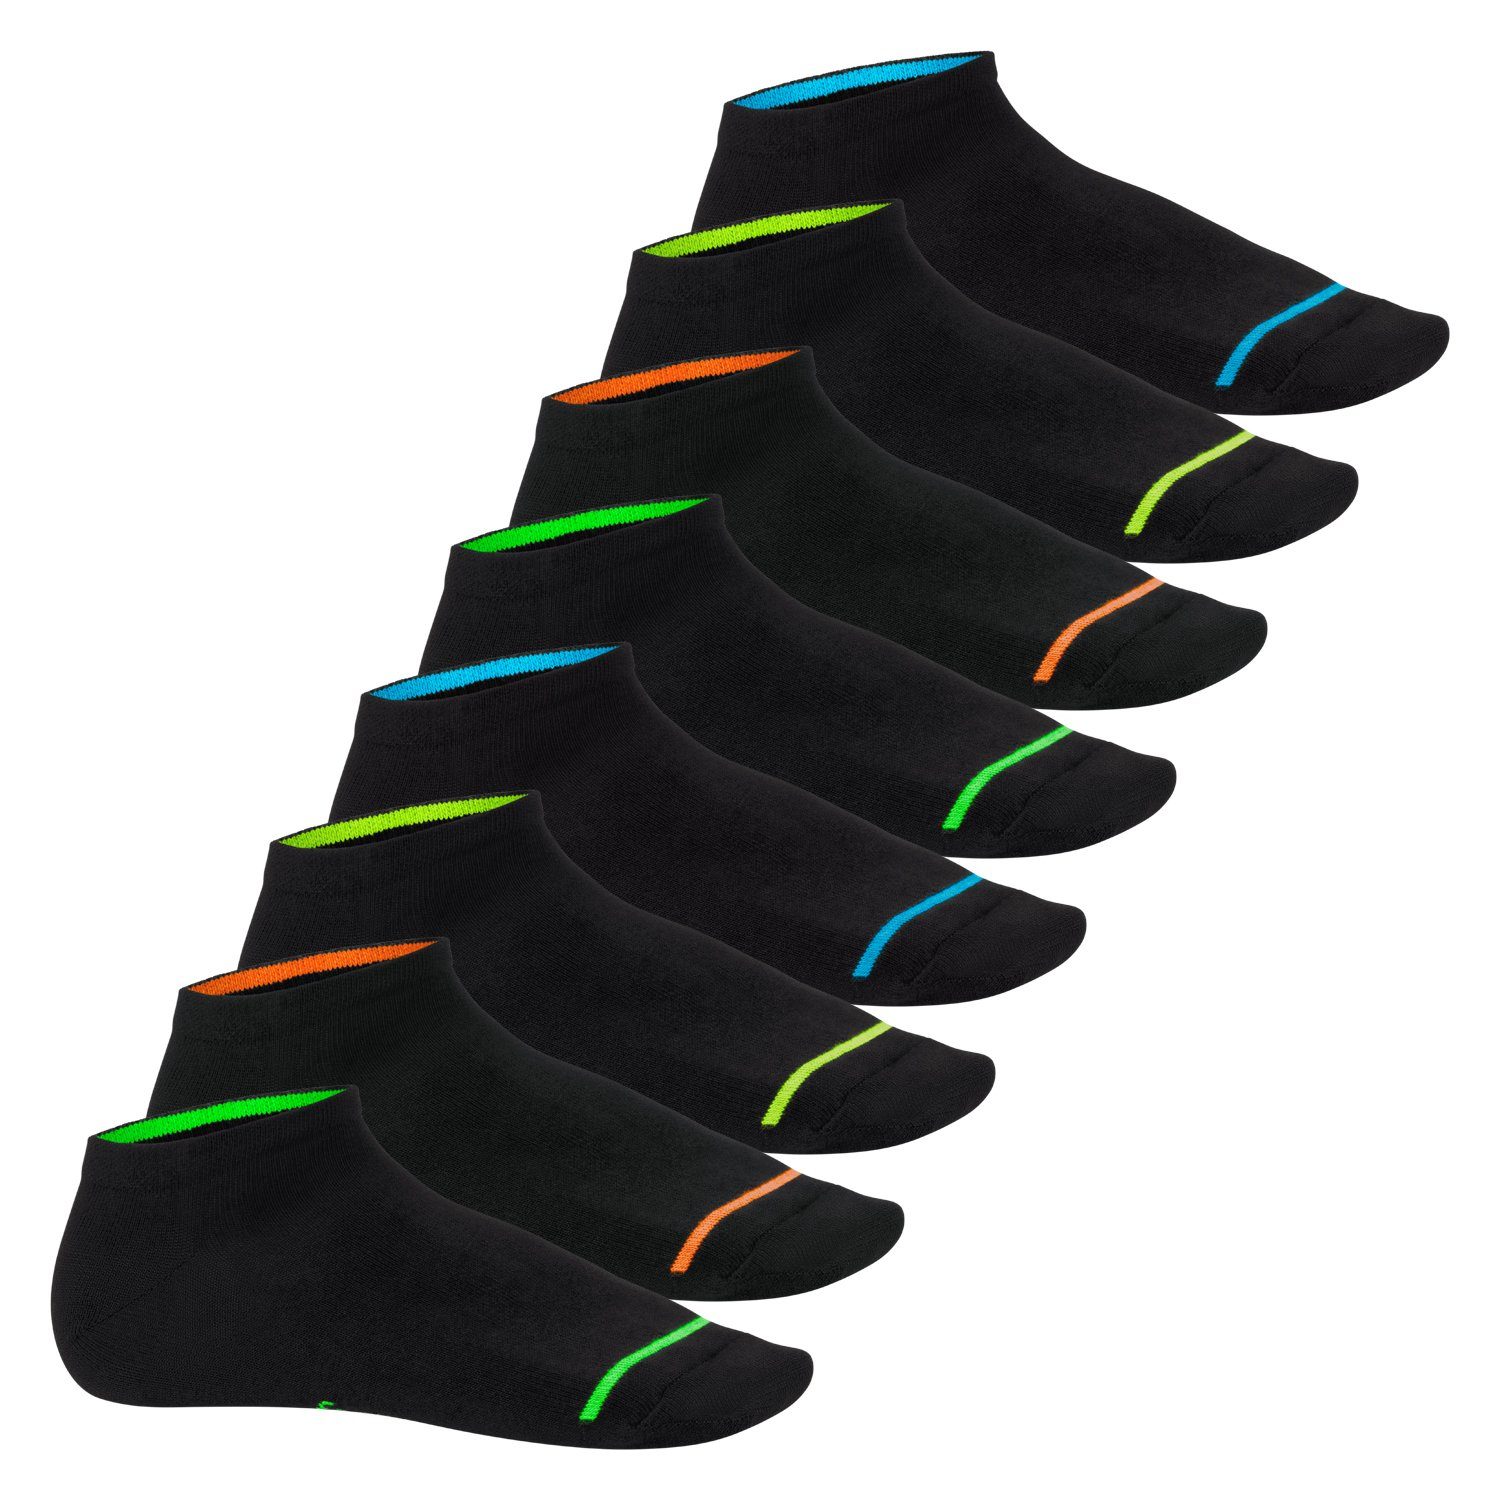 Footstar Füßlinge Damen & (8 Neon Schwarz Sportsocken Socken - Herren Paar), Neon Glow Sneaker